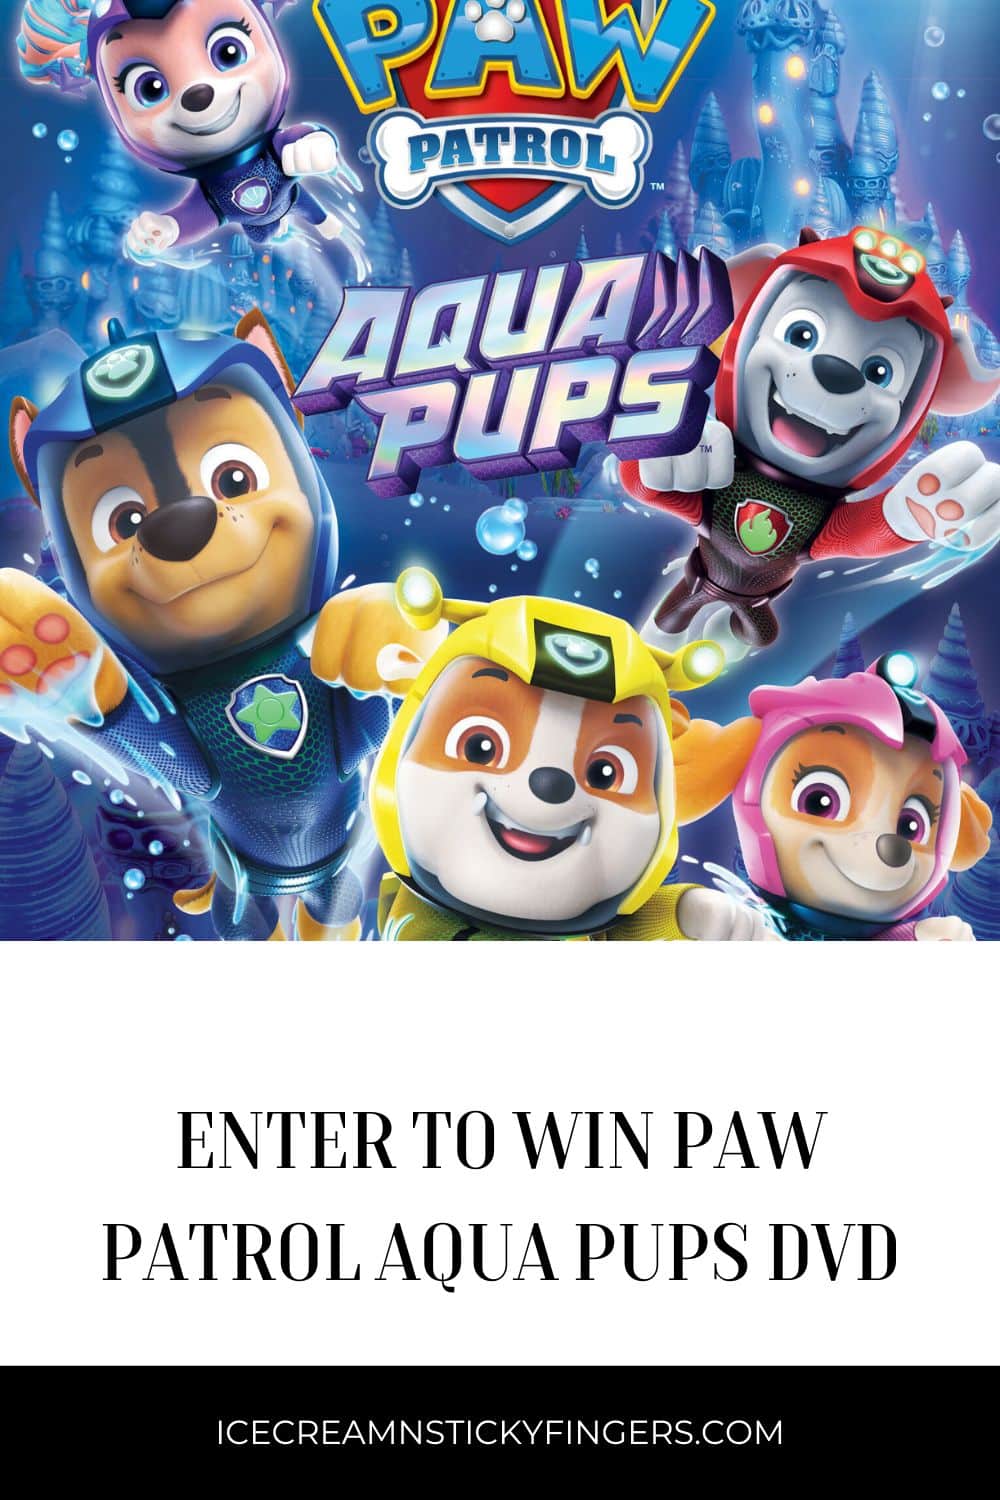 Enter to Win Paw Patrol Aqua Pups DVD